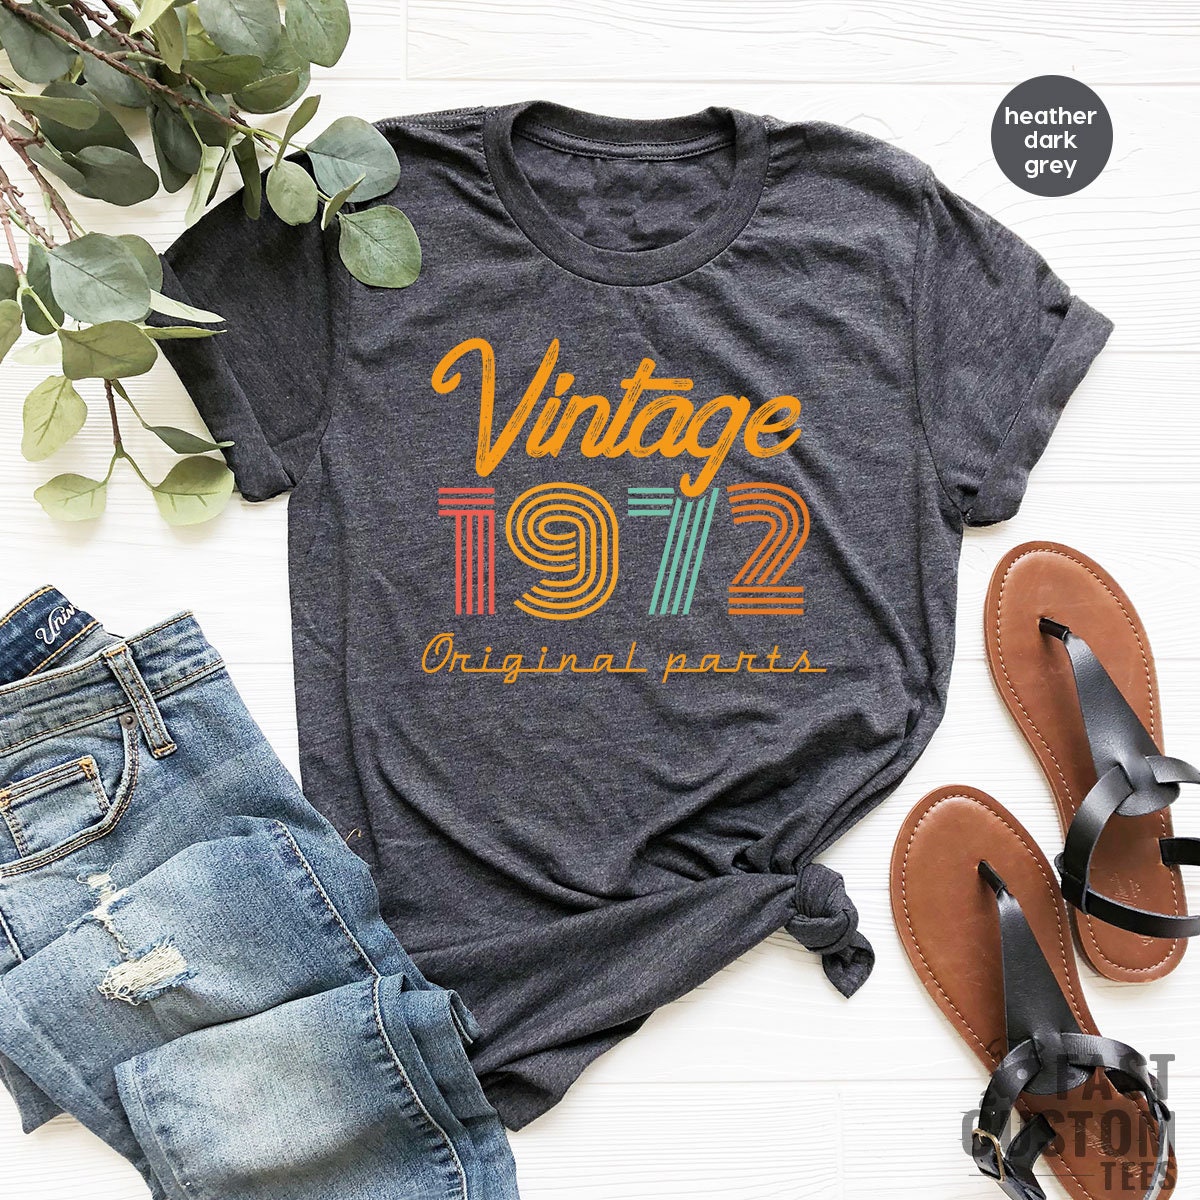 1. "Vintage 1972" T-Shirt